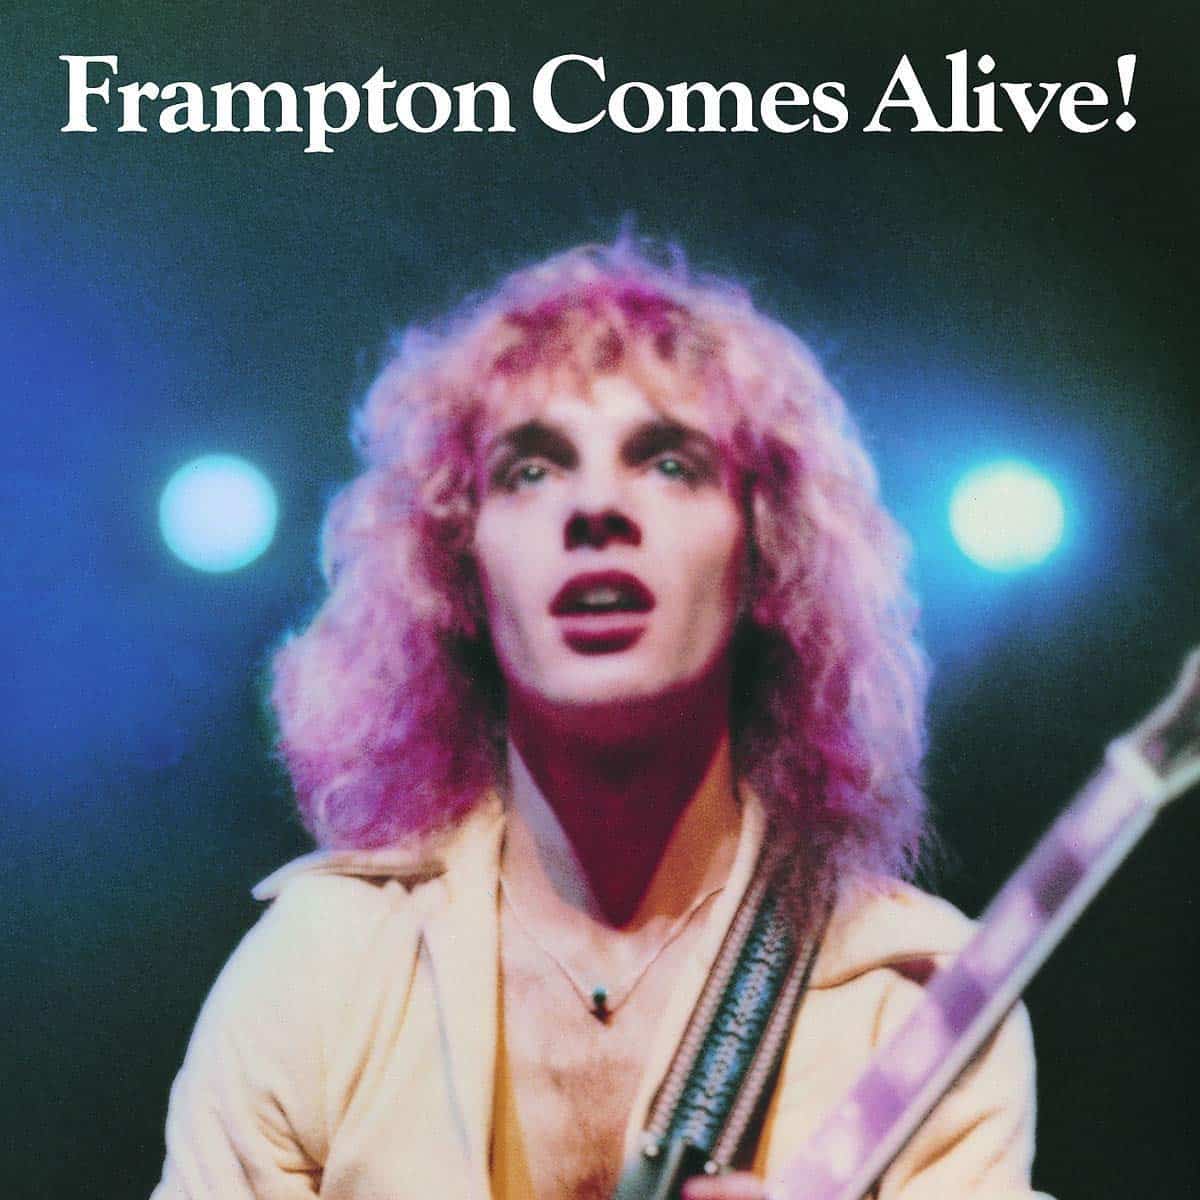 Peter-Frampton-Frampton-Comes-Alive-vinyl-record-album-front